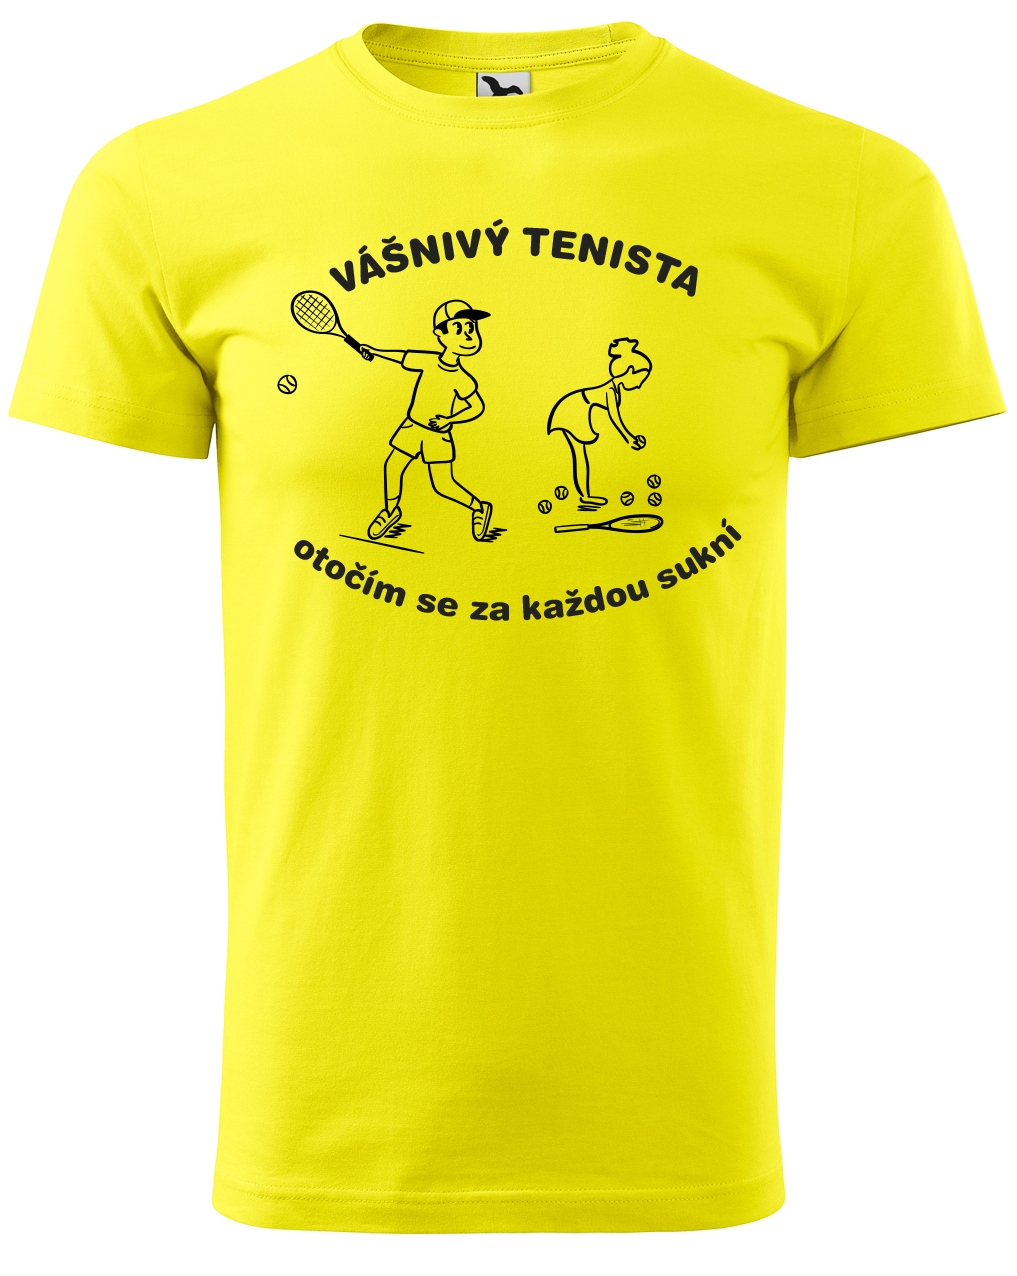 Vtipné tenisové tričko - Vášnivý tenista Velikost: M, Barva: Žlutá (04)